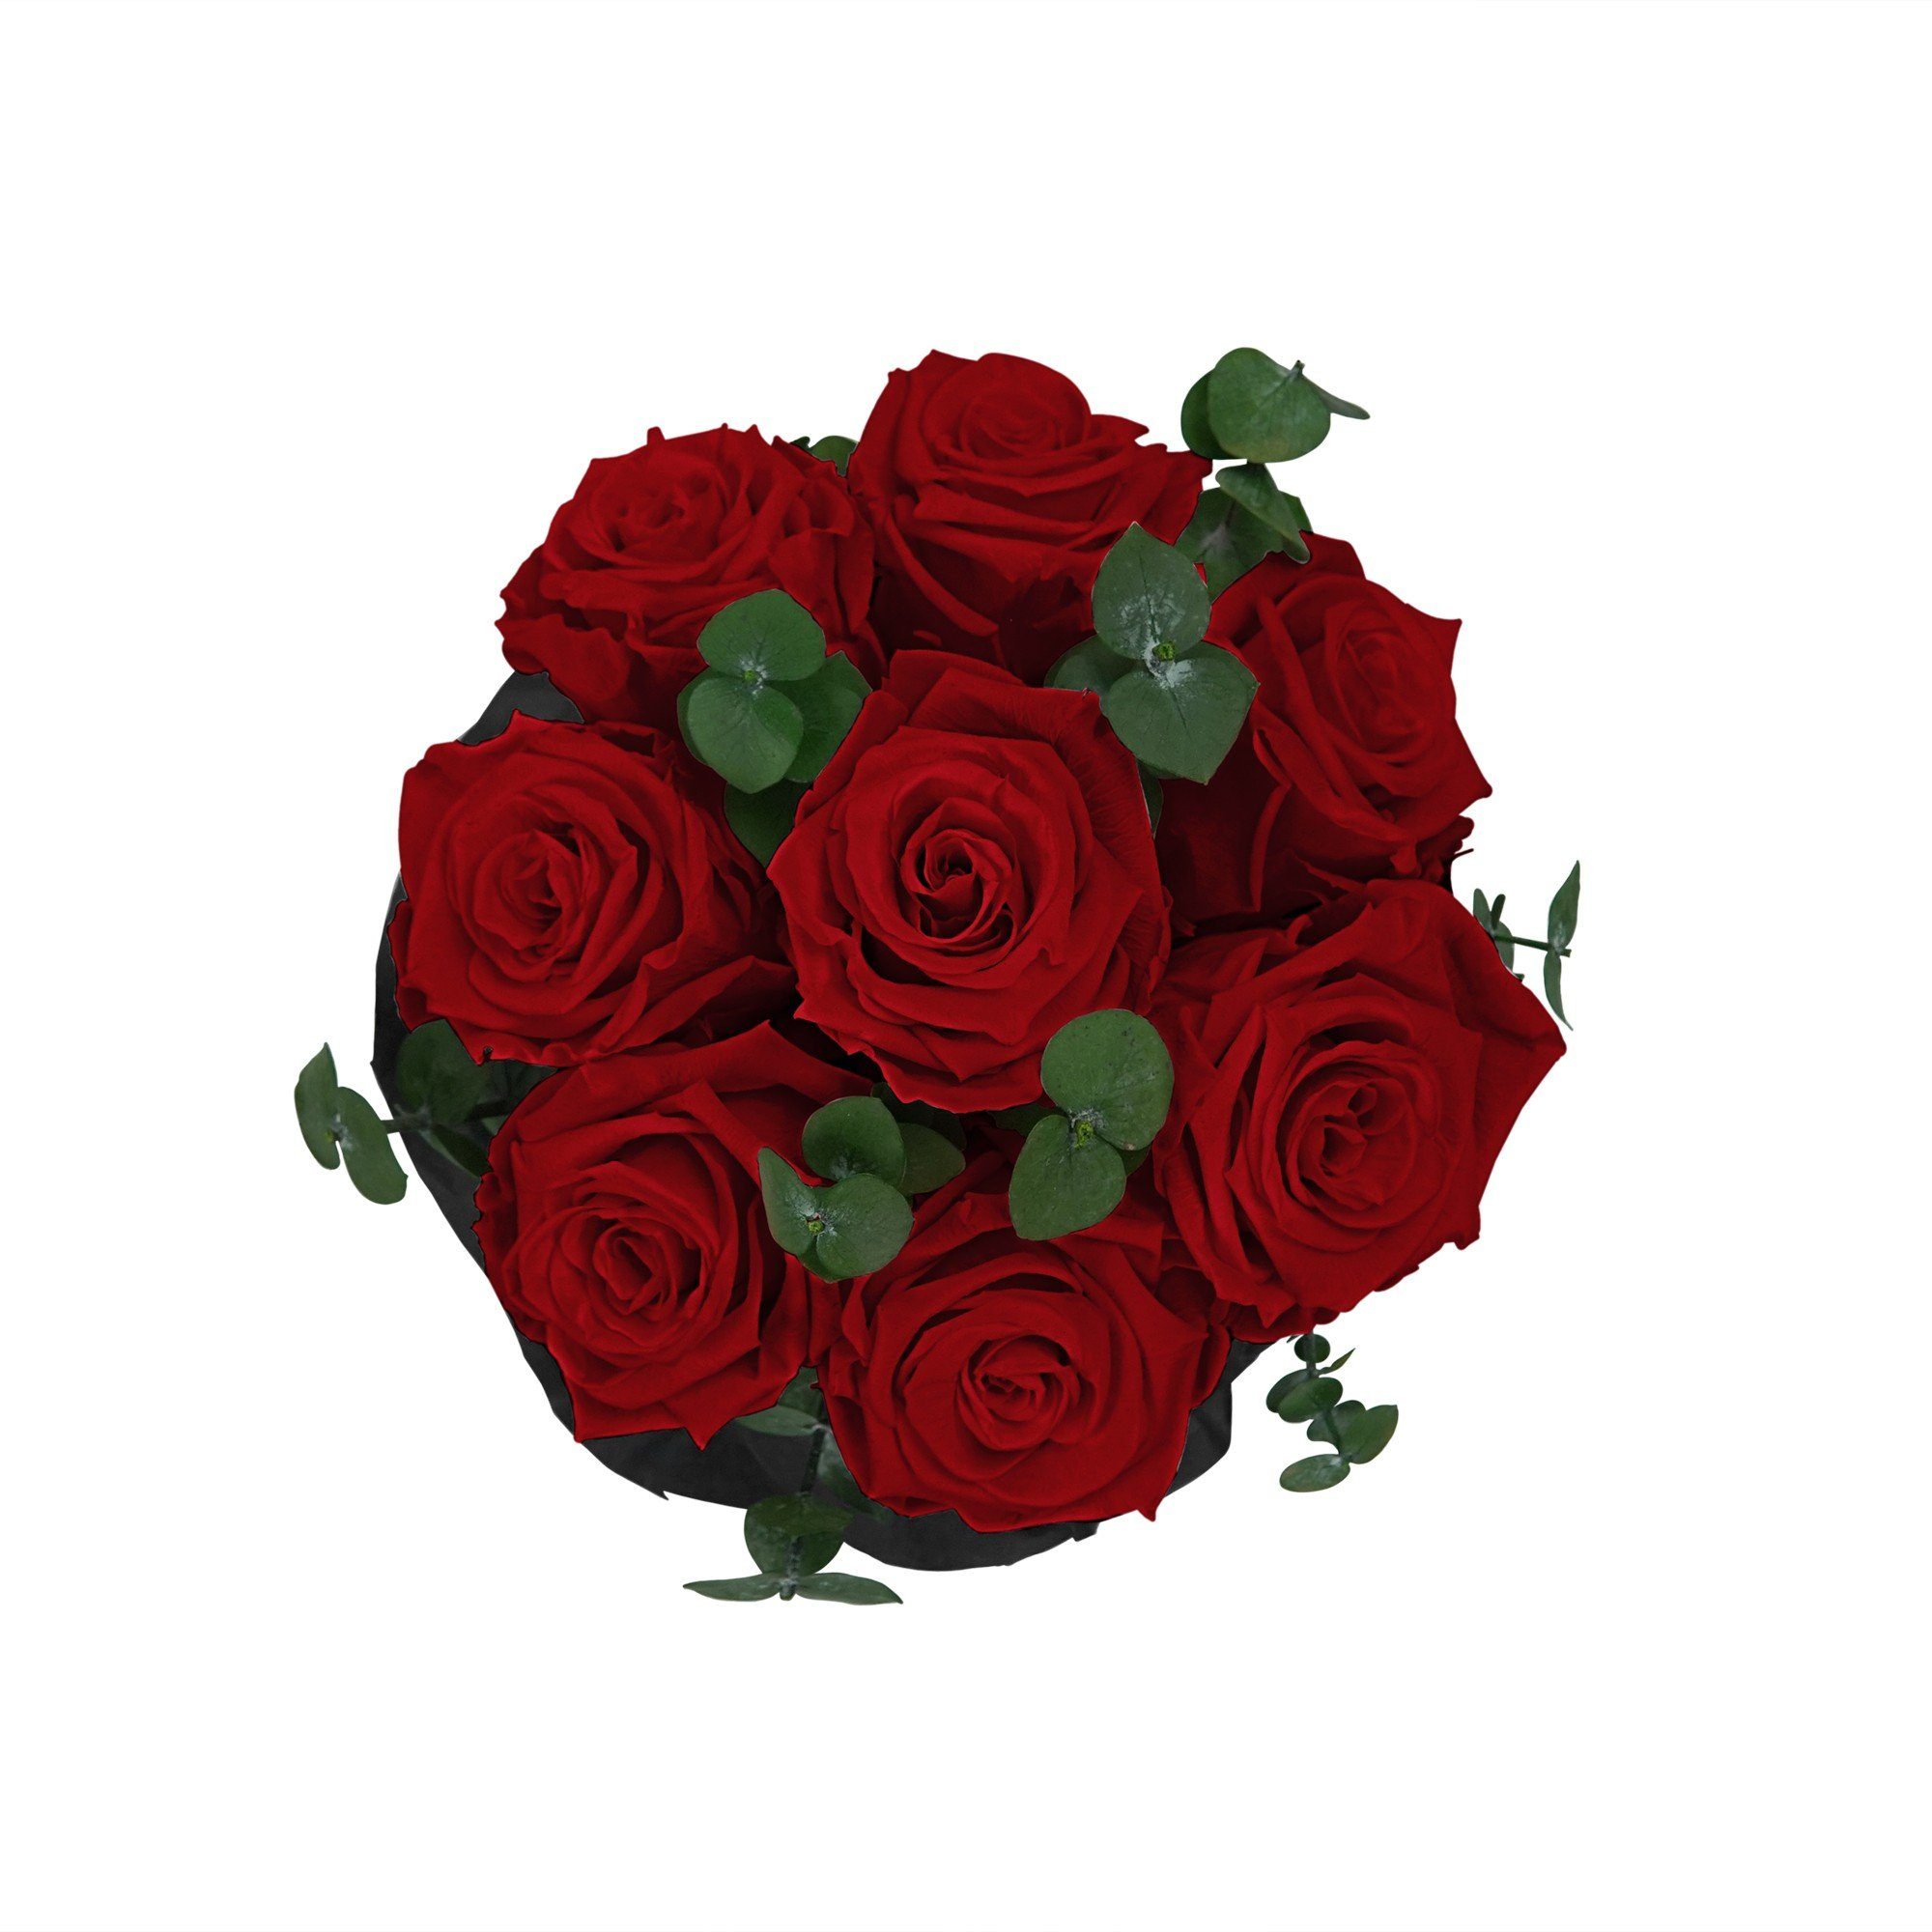 Rot Jahre mit Blumen Infinity 3 konservierte Rosen Raul Holy Bouquet Kunstblume Flowers duftende Echte, by I haltbar I 7-9 Richter Rosenbox Rose, I